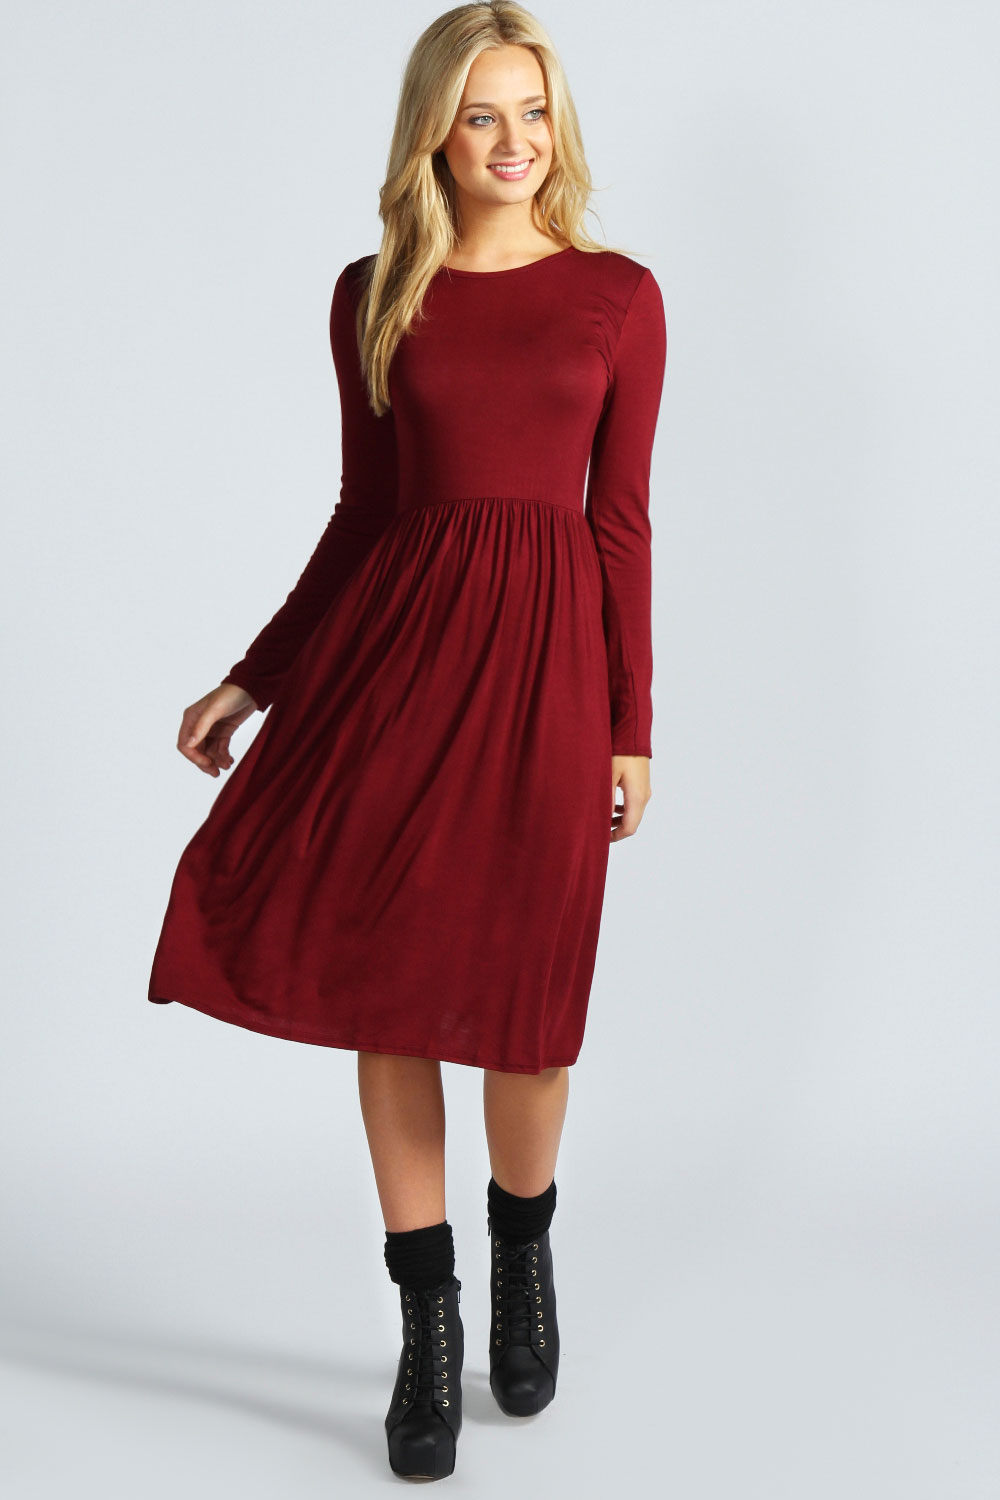 Long Sleeve Midi Dress Picture Collection | DressedUpGirl.com